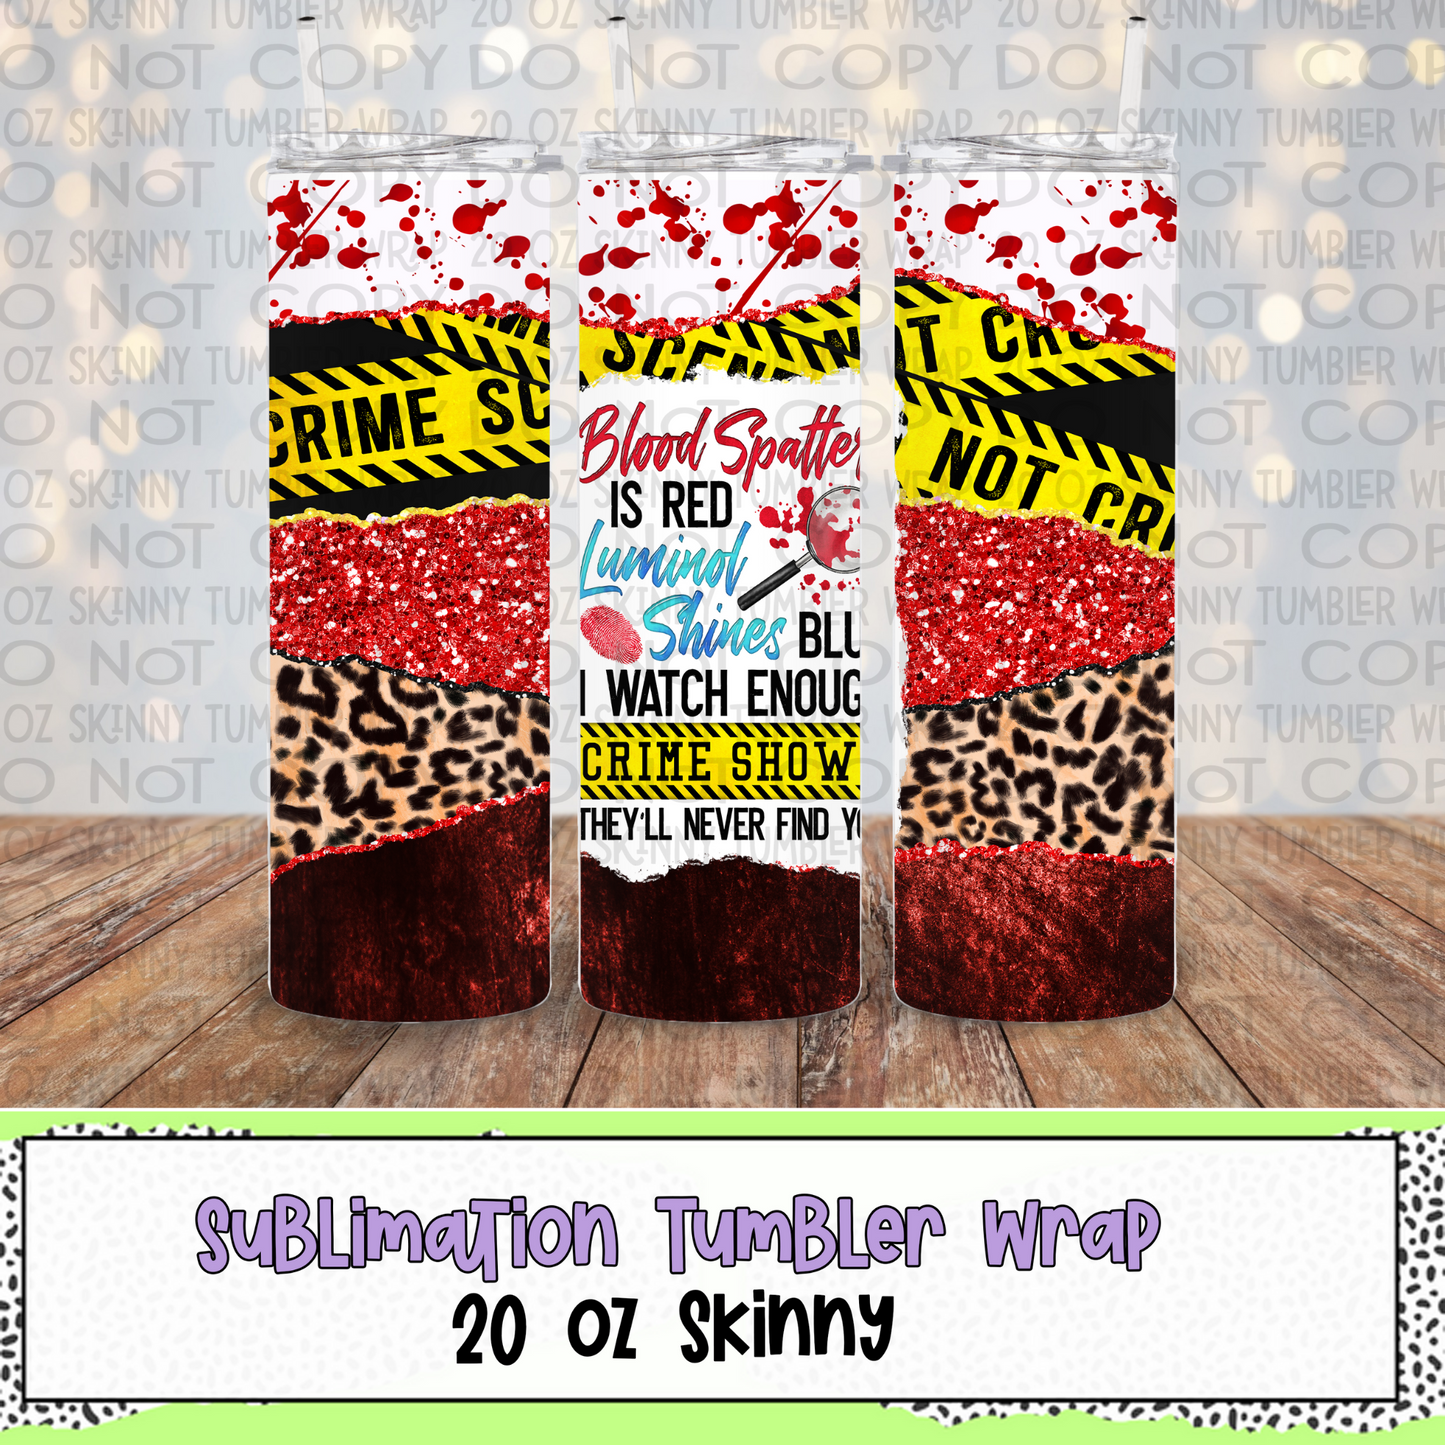 Blood Splatter is Red 20 Oz Skinny Tumbler Wrap - Sublimation Transfer - RTS